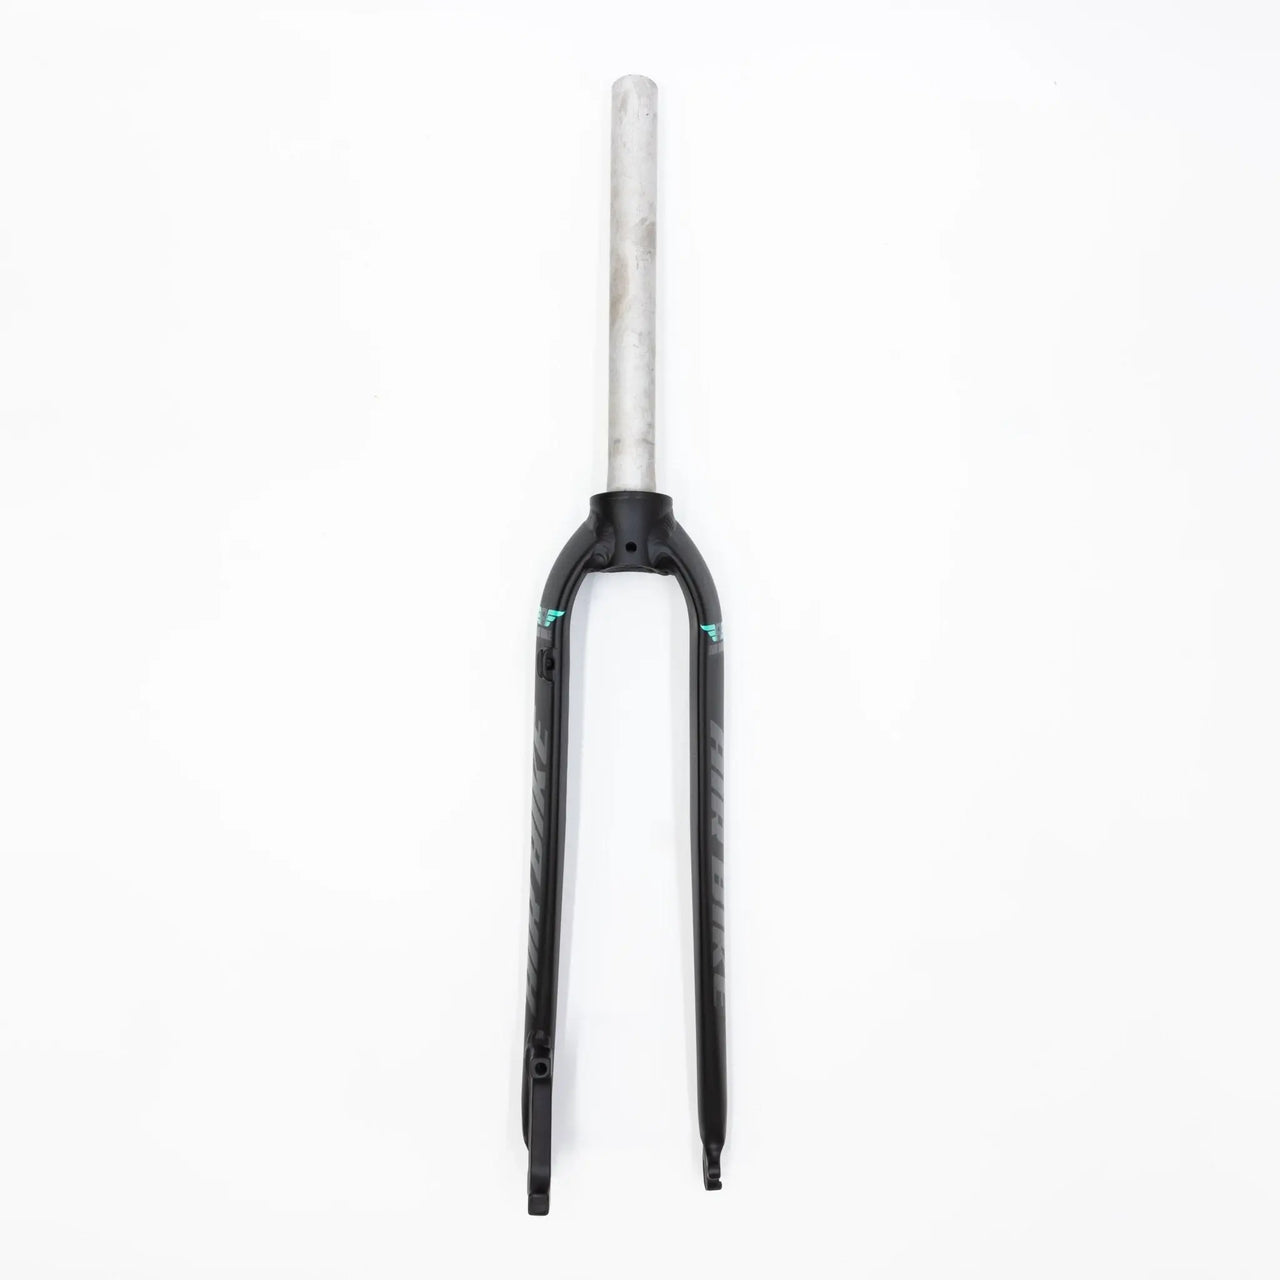 27.5 Rigid Fork for MTB/Mountain Bike Hard Fork - Black Aluminium 1-1/8" Disc Brake - Air BikeBicycle Forks